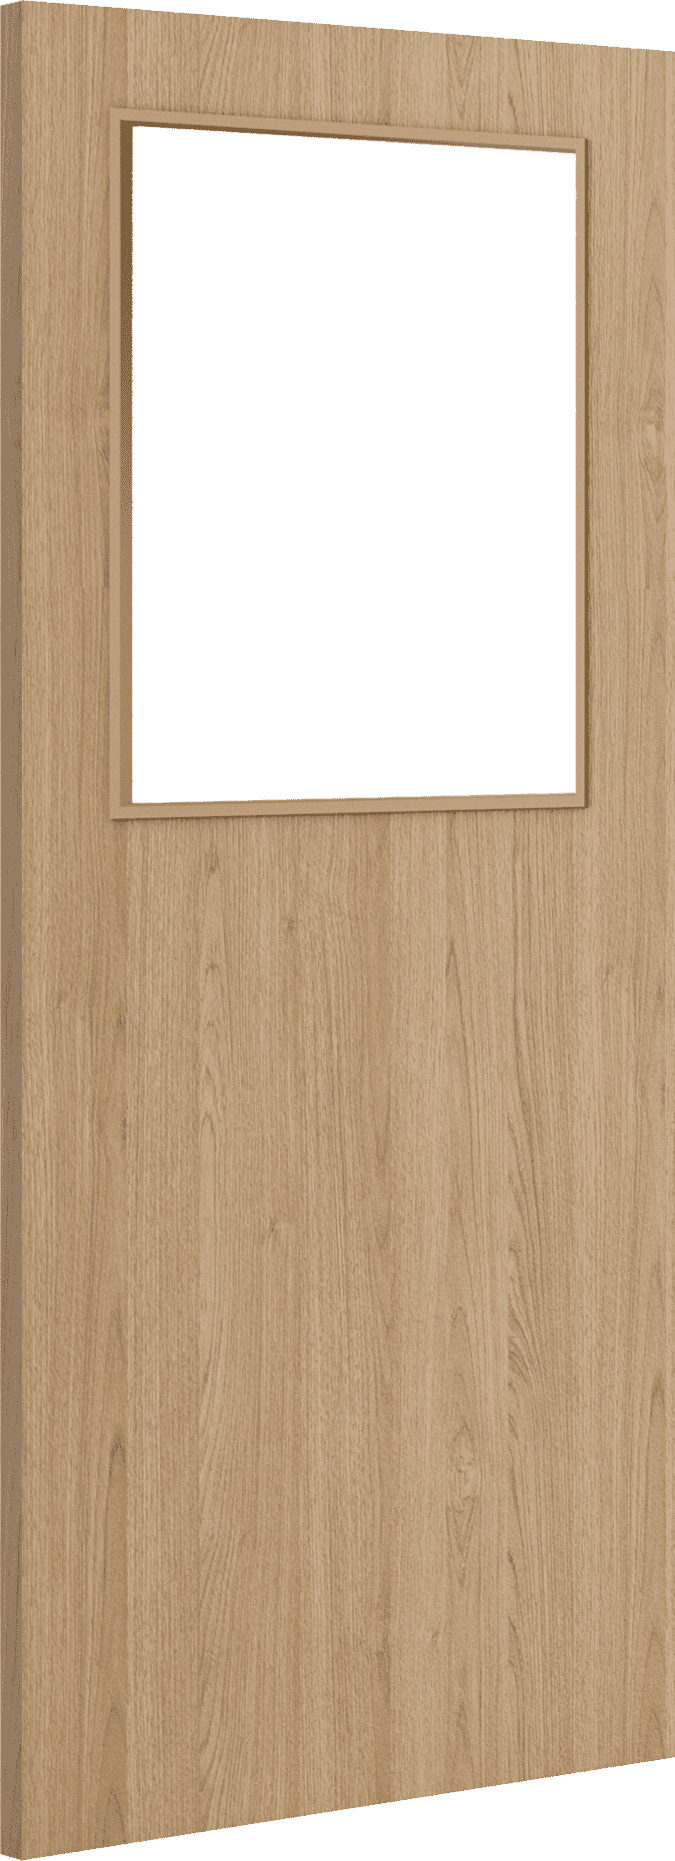 2040mm x 826mm x 44mm Architectural Oak 01 Frosted Glazed - Prefinished FD30 Fire Door Blank